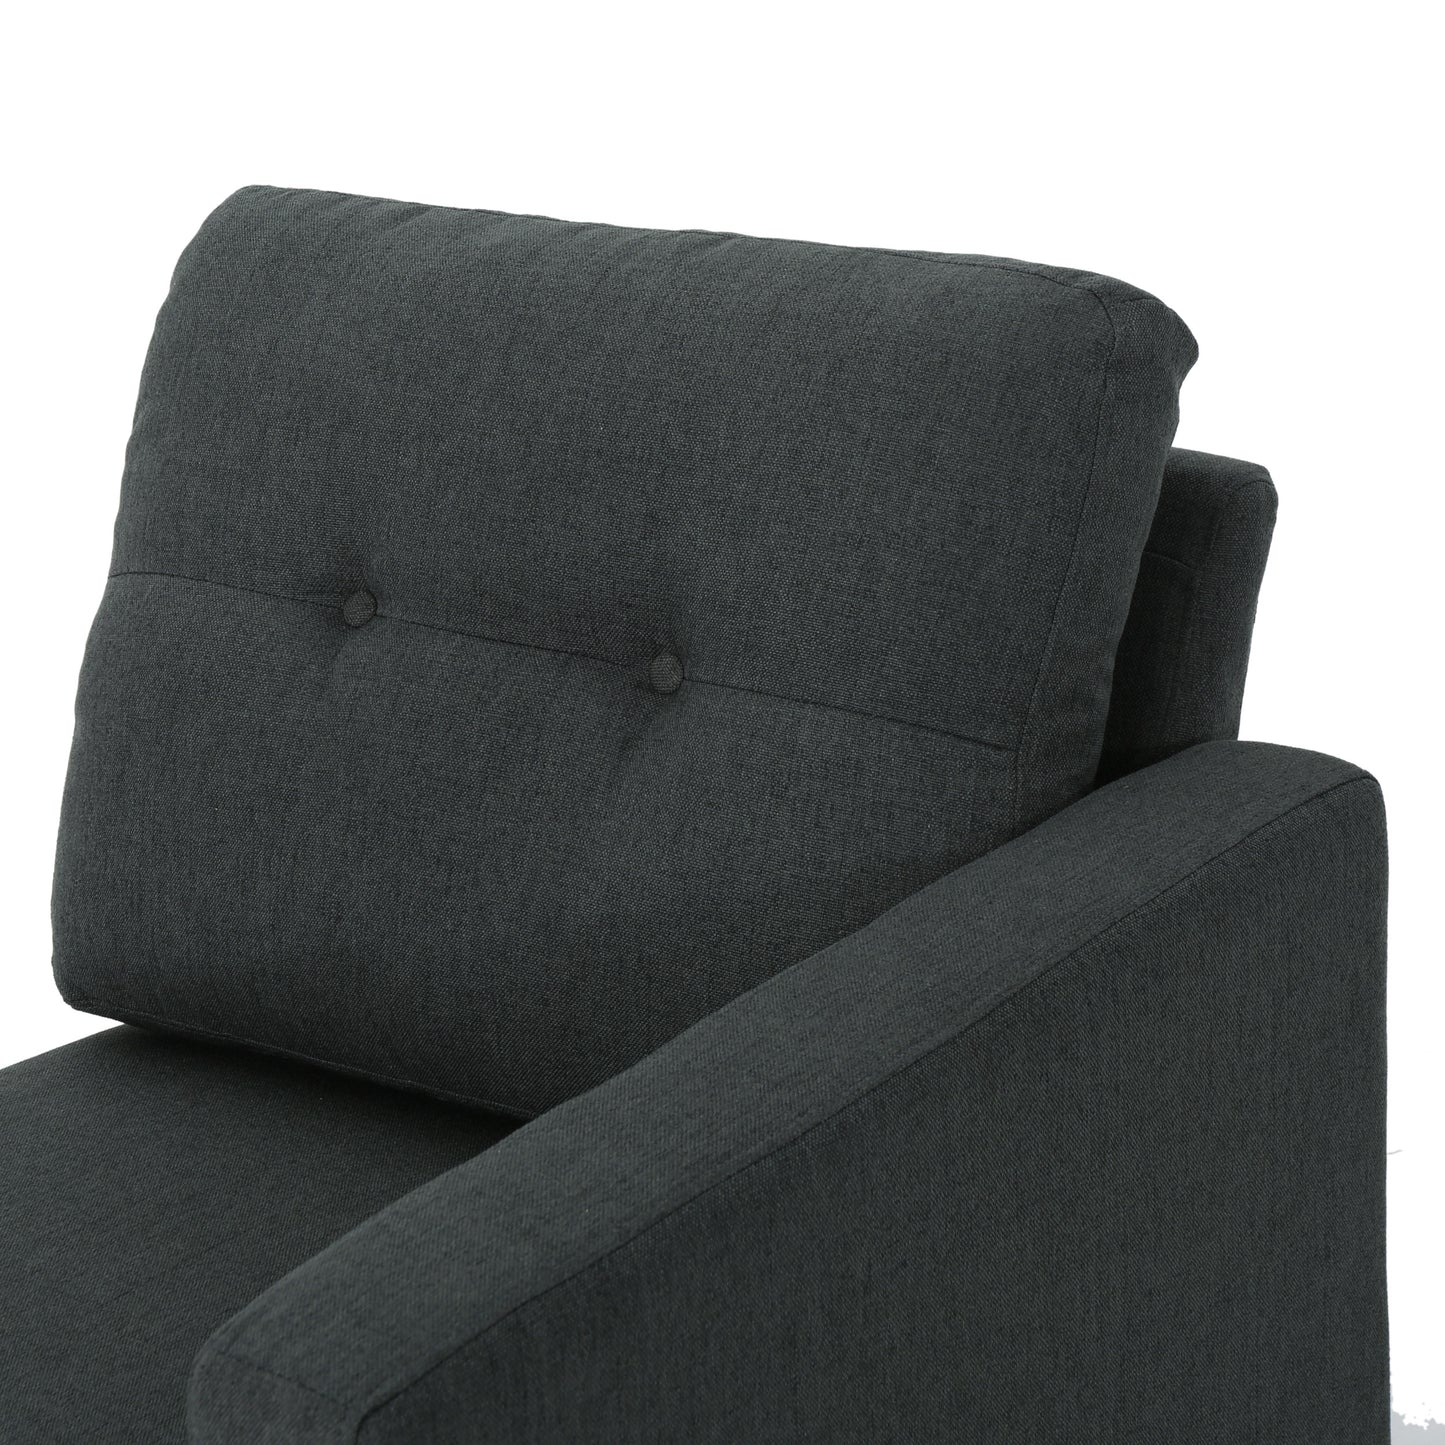 Niya Mid Century Modern 5 Piece Fabric Sectional Sofa